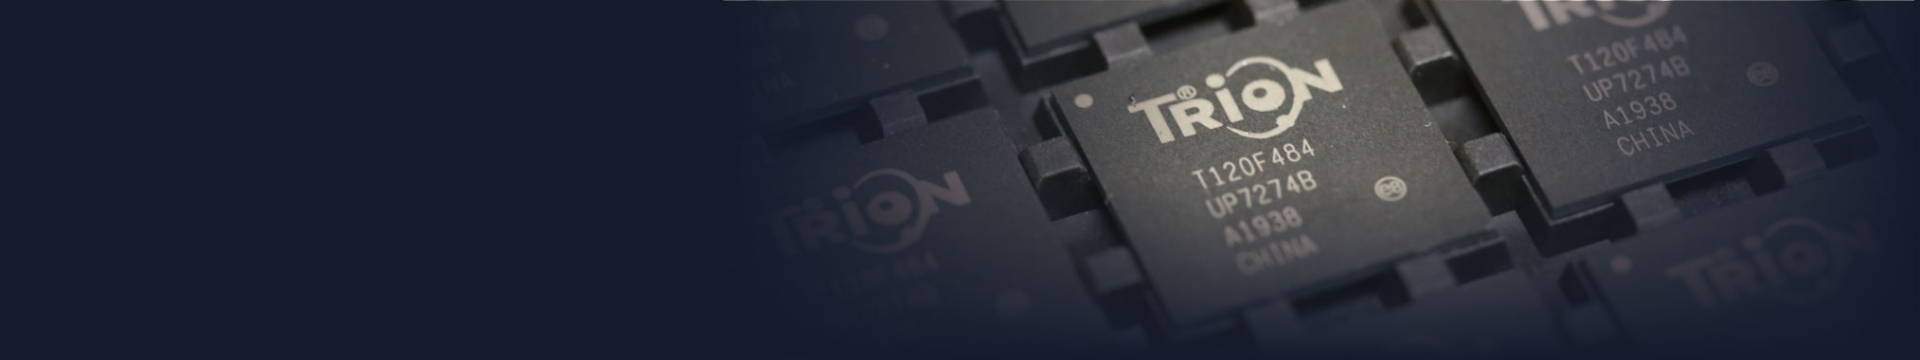 易灵思 FPGA Trion产品系列